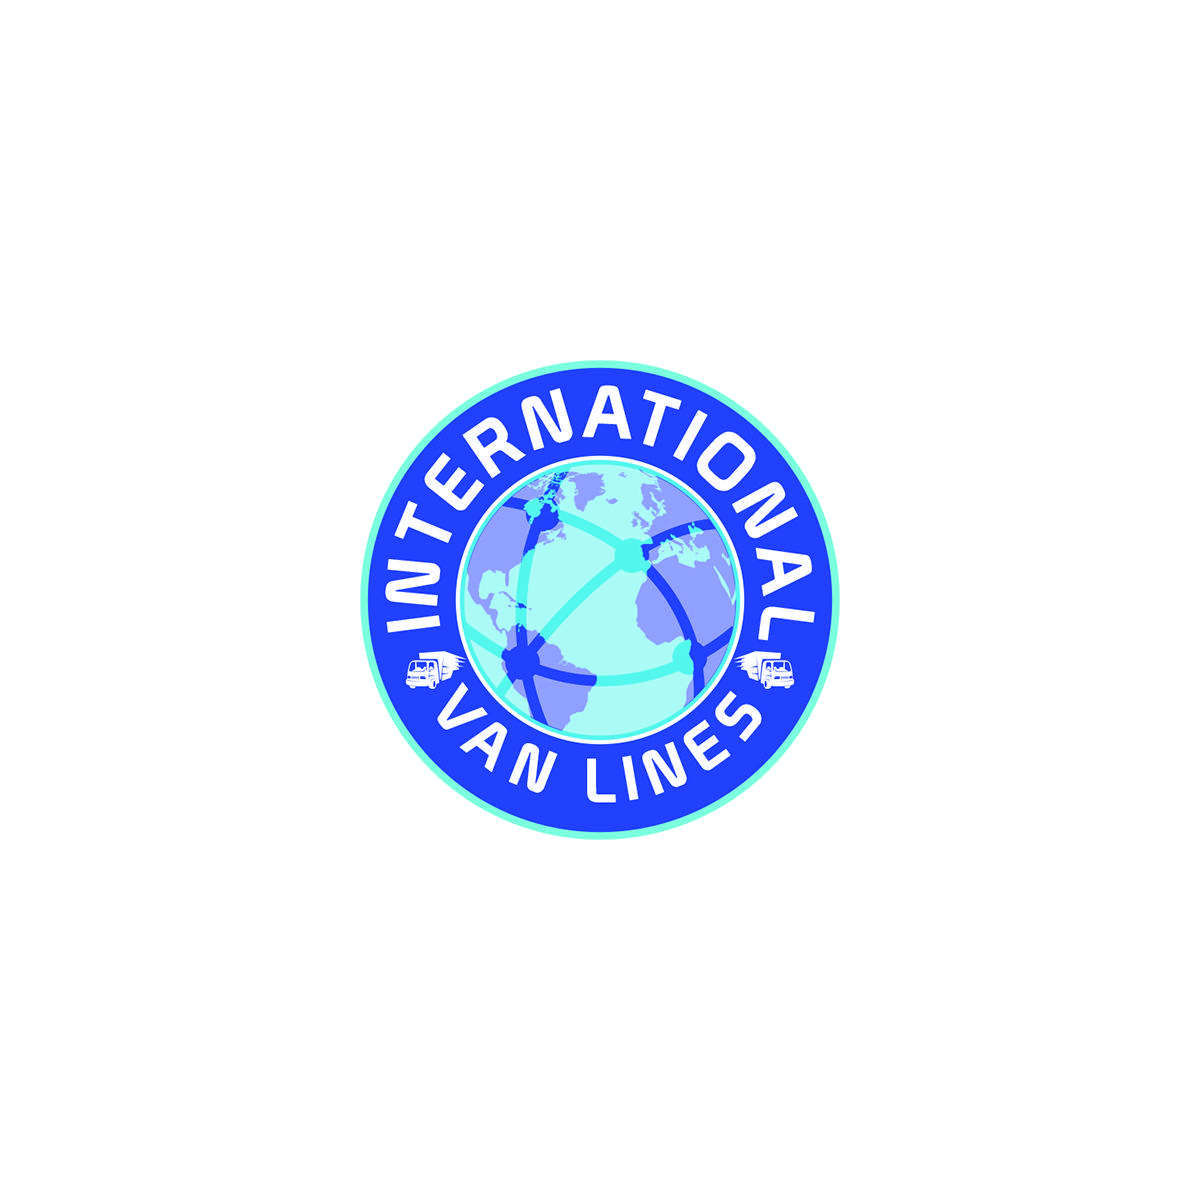 Blue Lines Company Logo - Modern, Professional, Moving Company Logo Design for international